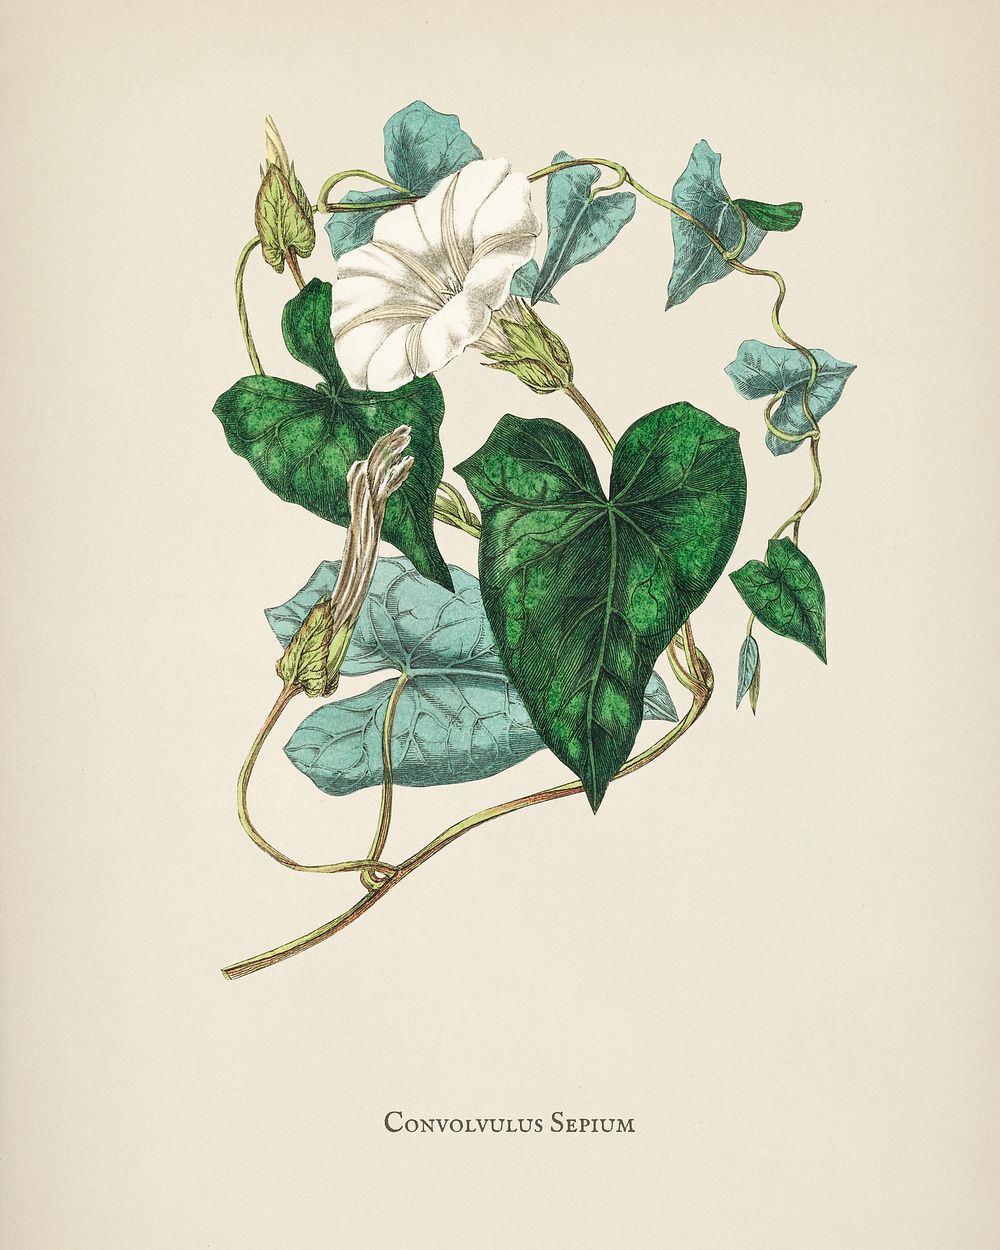 Bindweed (Convolvulus sepium) illustration from Medical Botany (1836) by John Stephenson and James Morss Churchill.